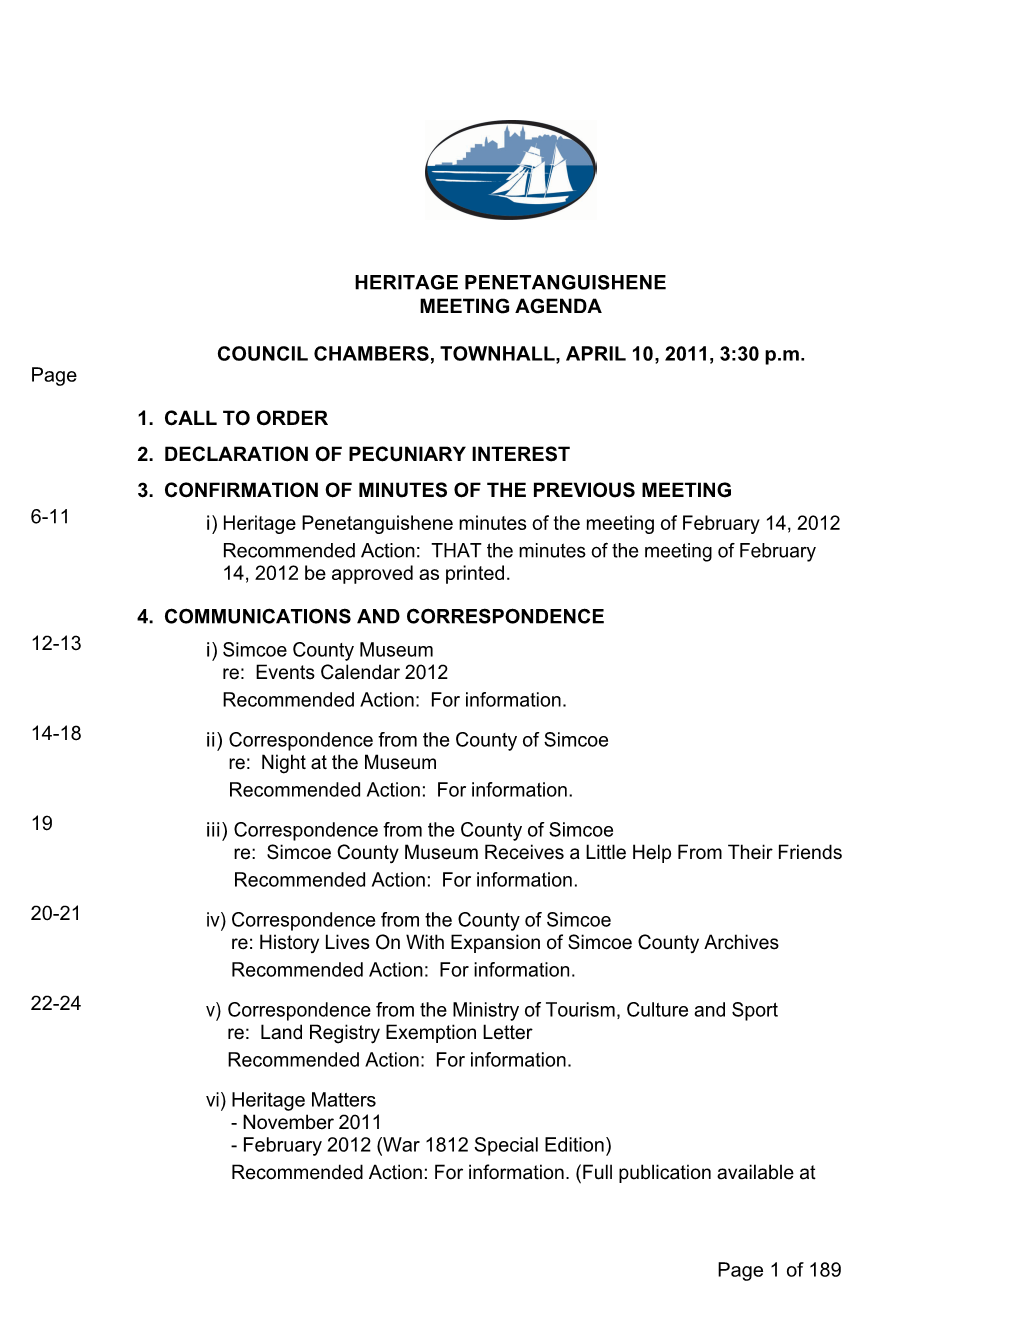 HERITAGE PENETANGUISHENE MEETING AGENDA COUNCIL CHAMBERS, TOWNHALL, APRIL 10, 2011, 3:30 P.M. Page 1. CALL to ORDER 2. DECLARAT